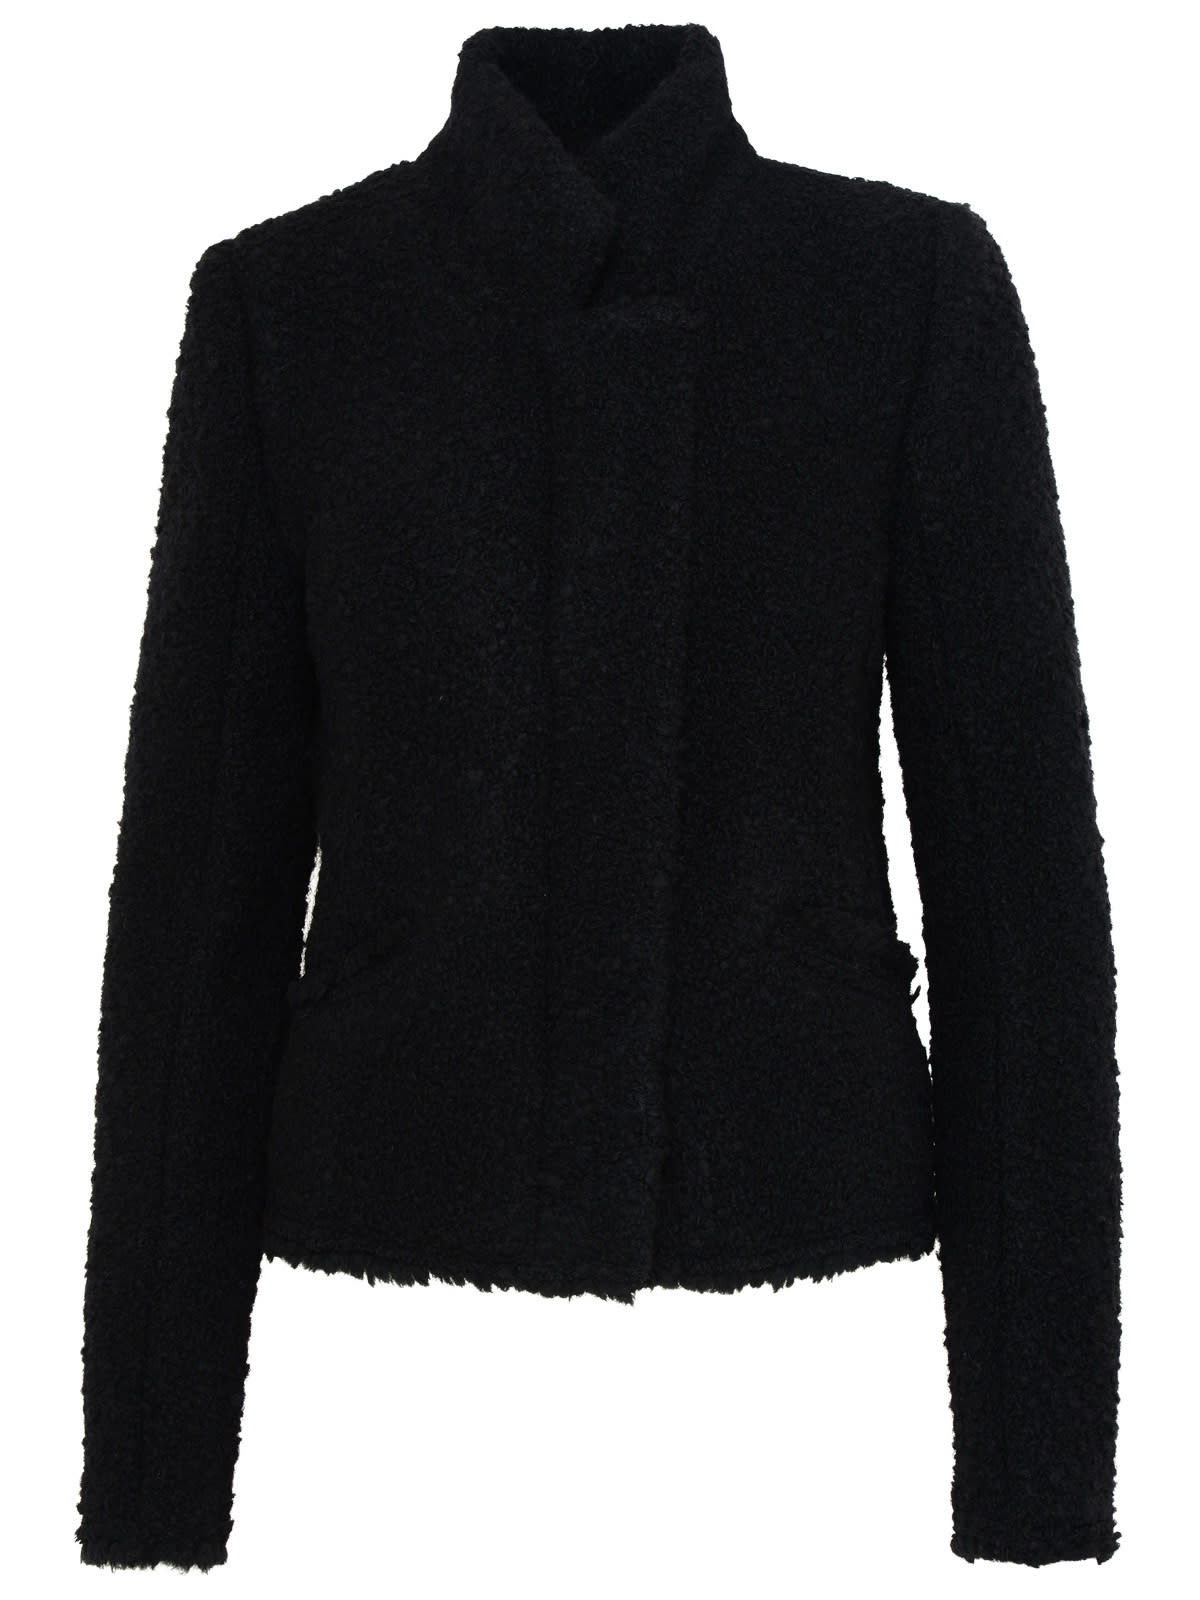 graziae Black Wool Blend Jacket